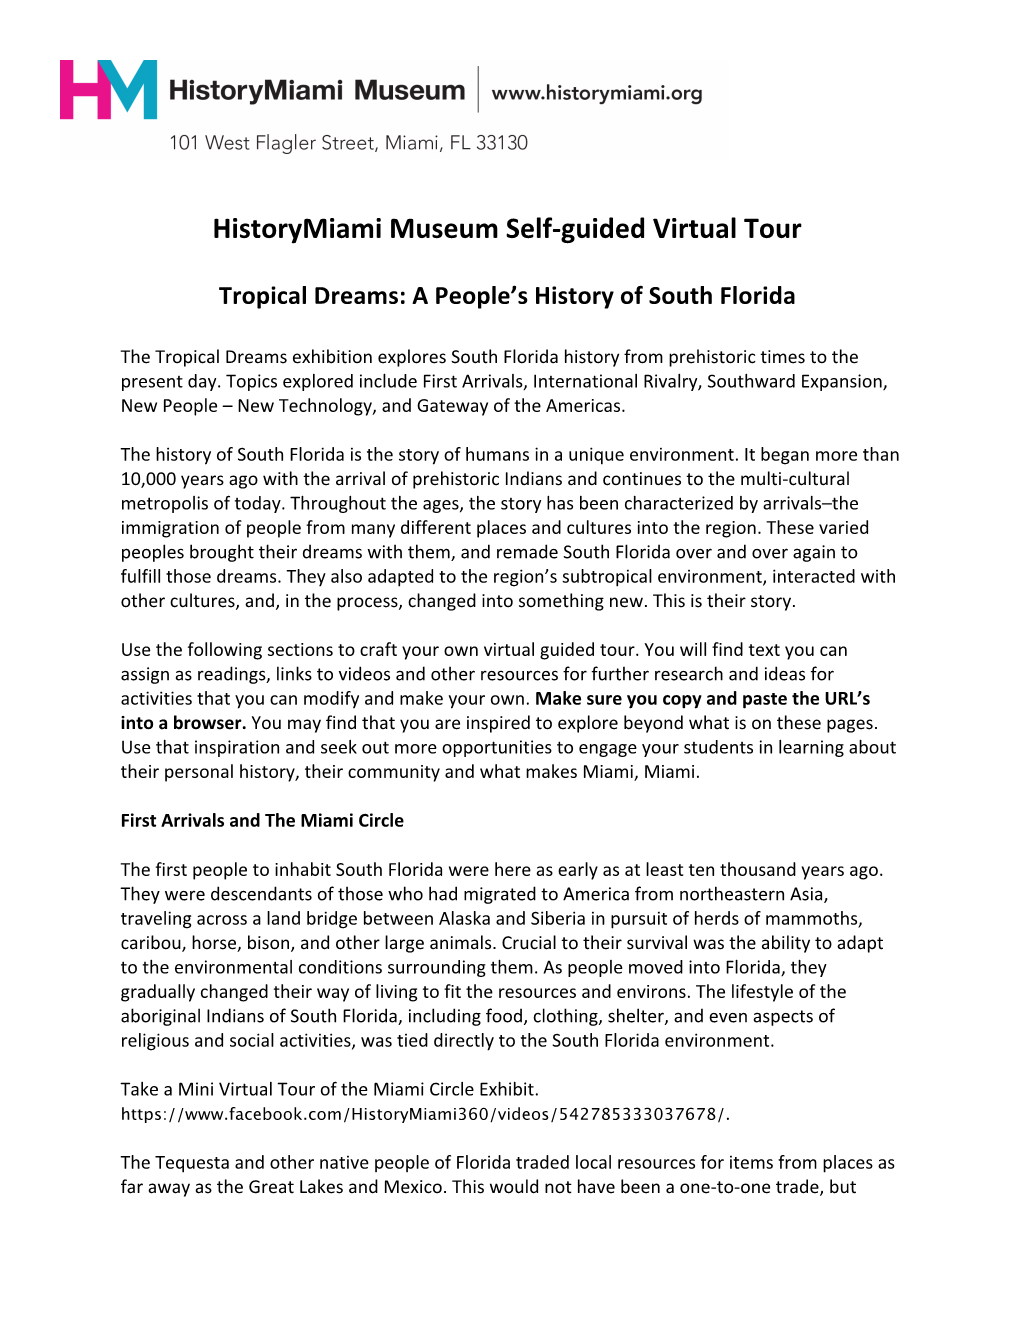 Historymiami Museum Self-Guided Virtual Tour